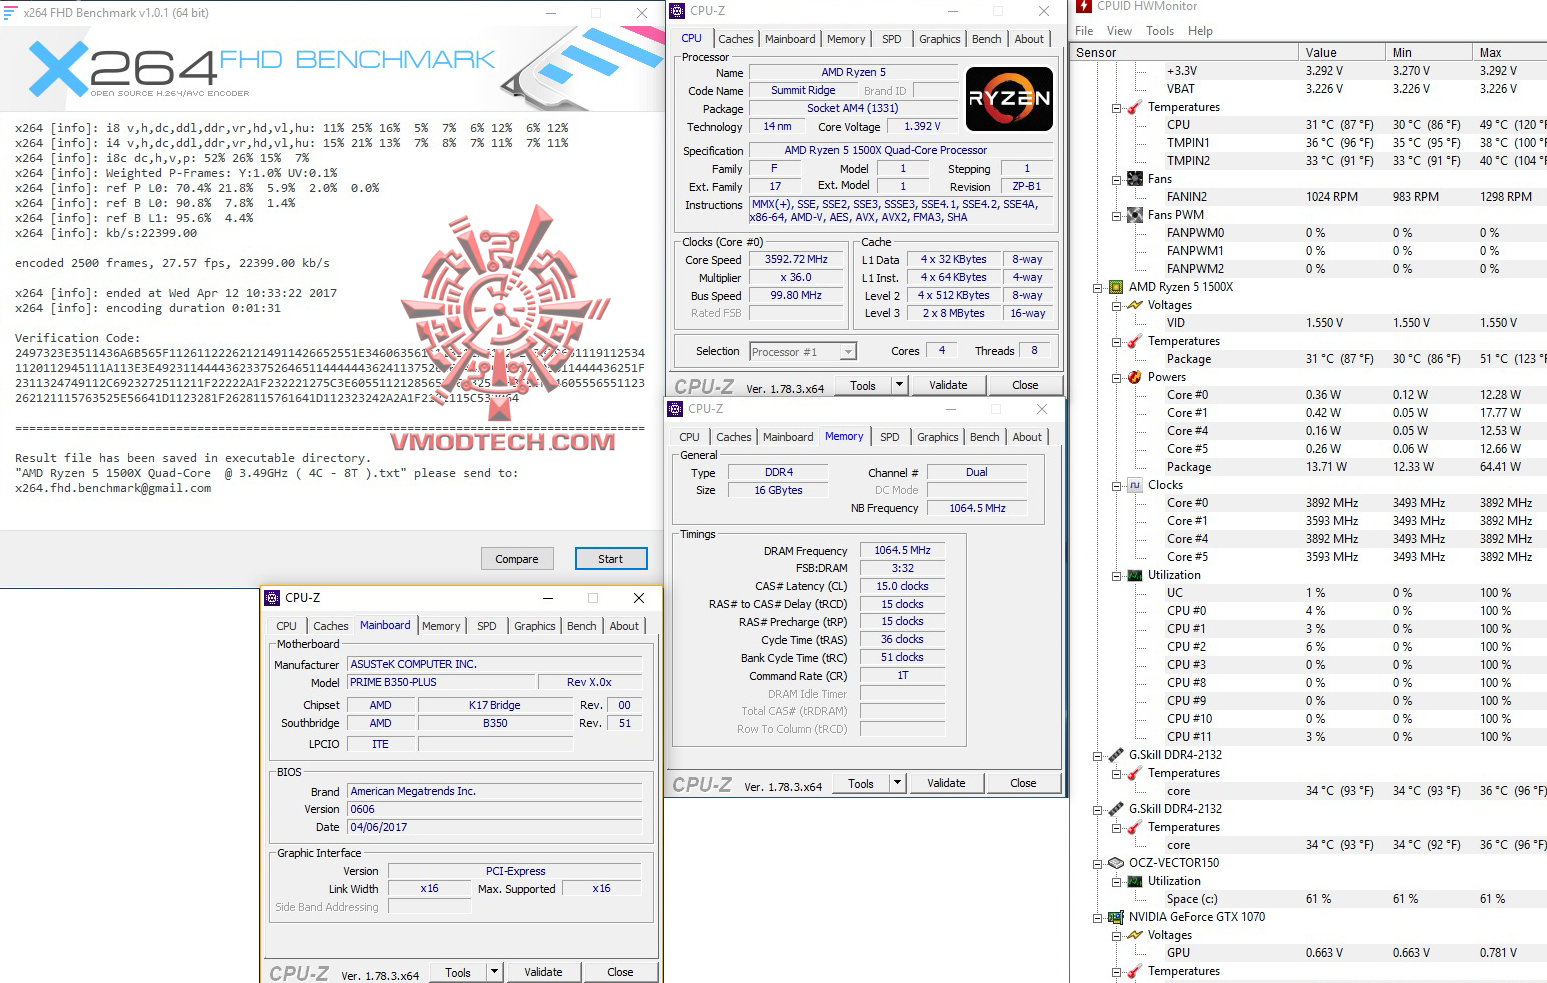 x264 1 AMD RYZEN 5 1500X Review